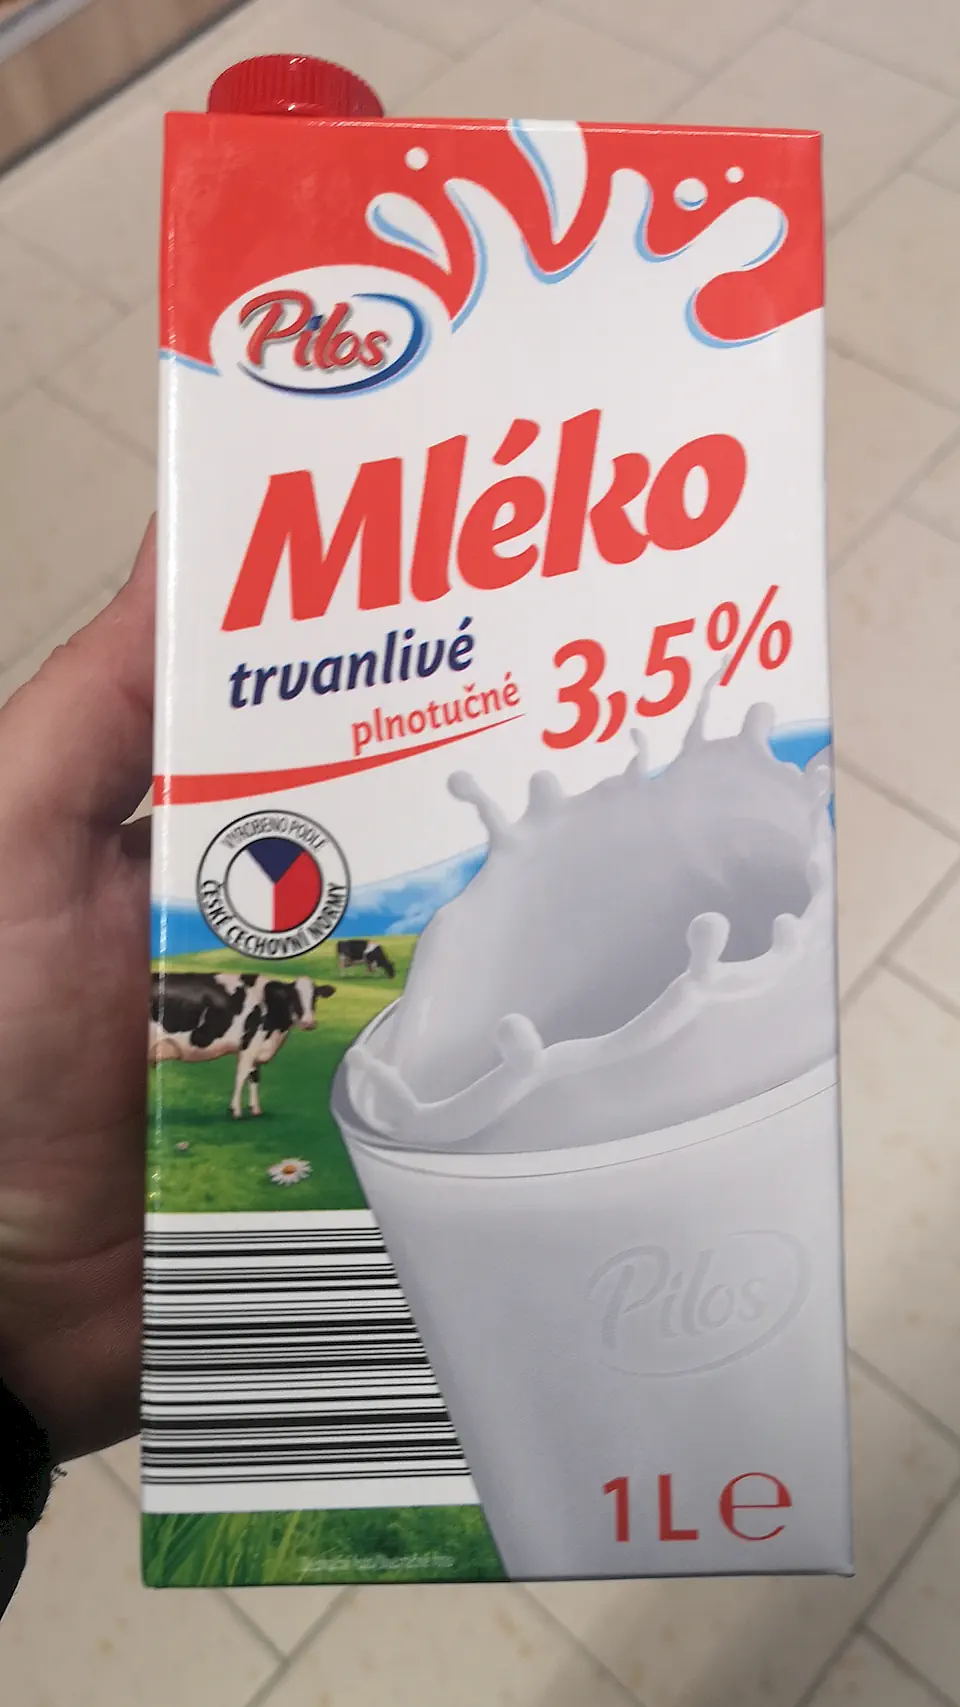 Pilos Mléko plnotučné